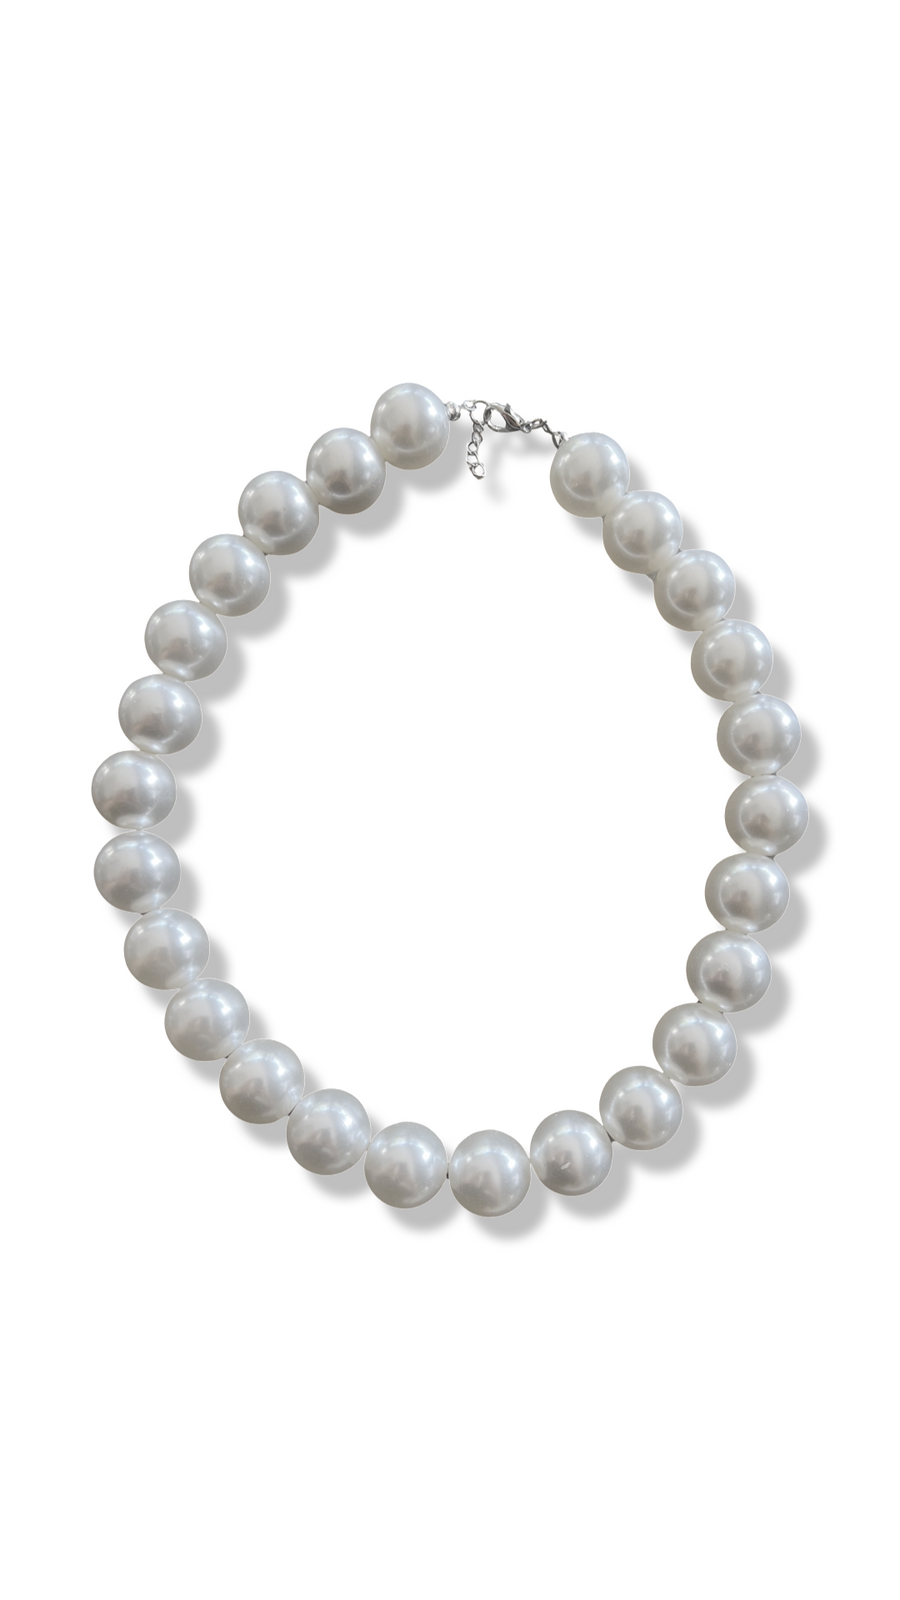 Linda pearl necklace